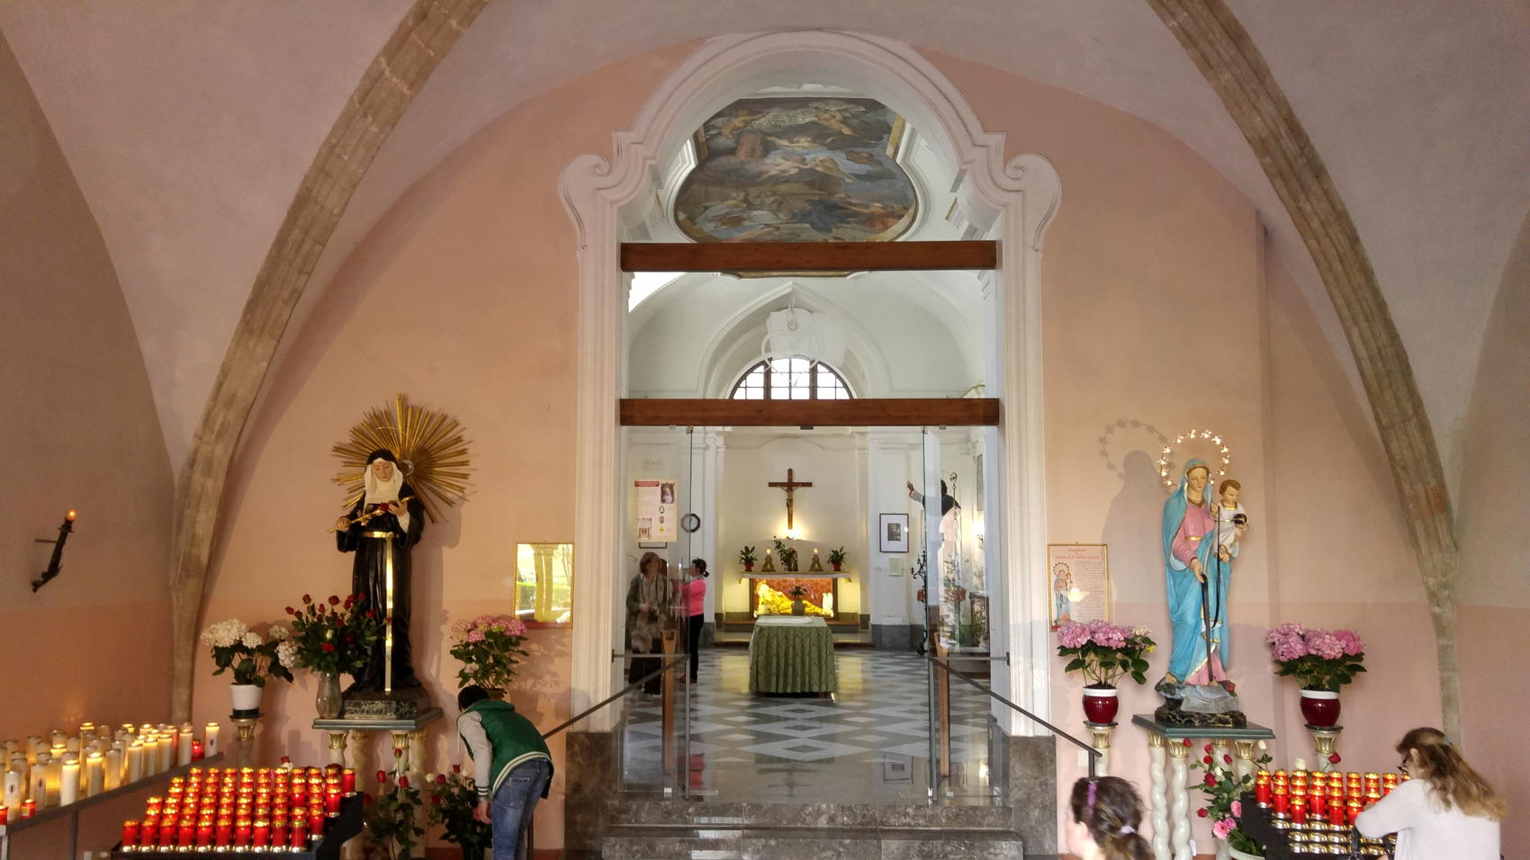 Claustro de Sant'Agostino - Santuario de Santa Rita